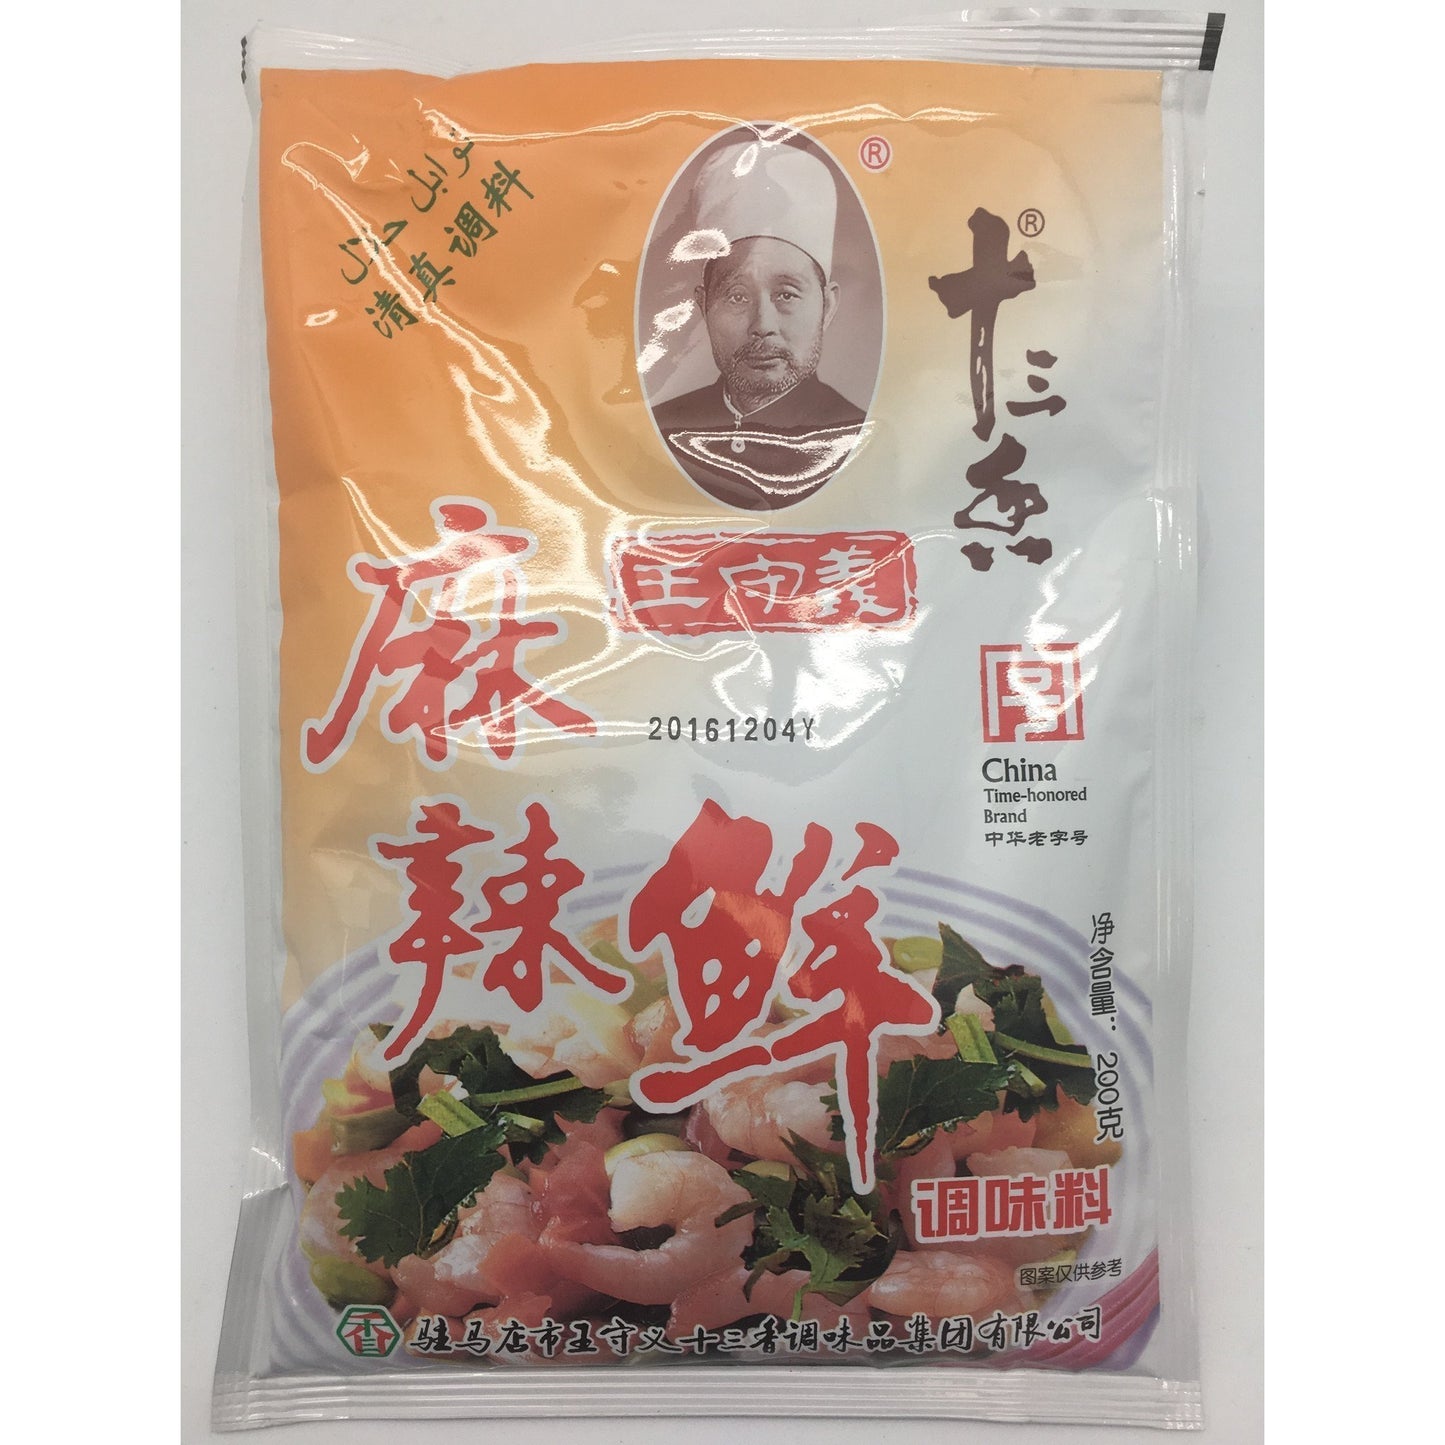 PD022S  Wang shou yi brand - seasoning powder 200g - 30 bags / 1 CTN - New Eastland Pty Ltd - Asian food wholesalers